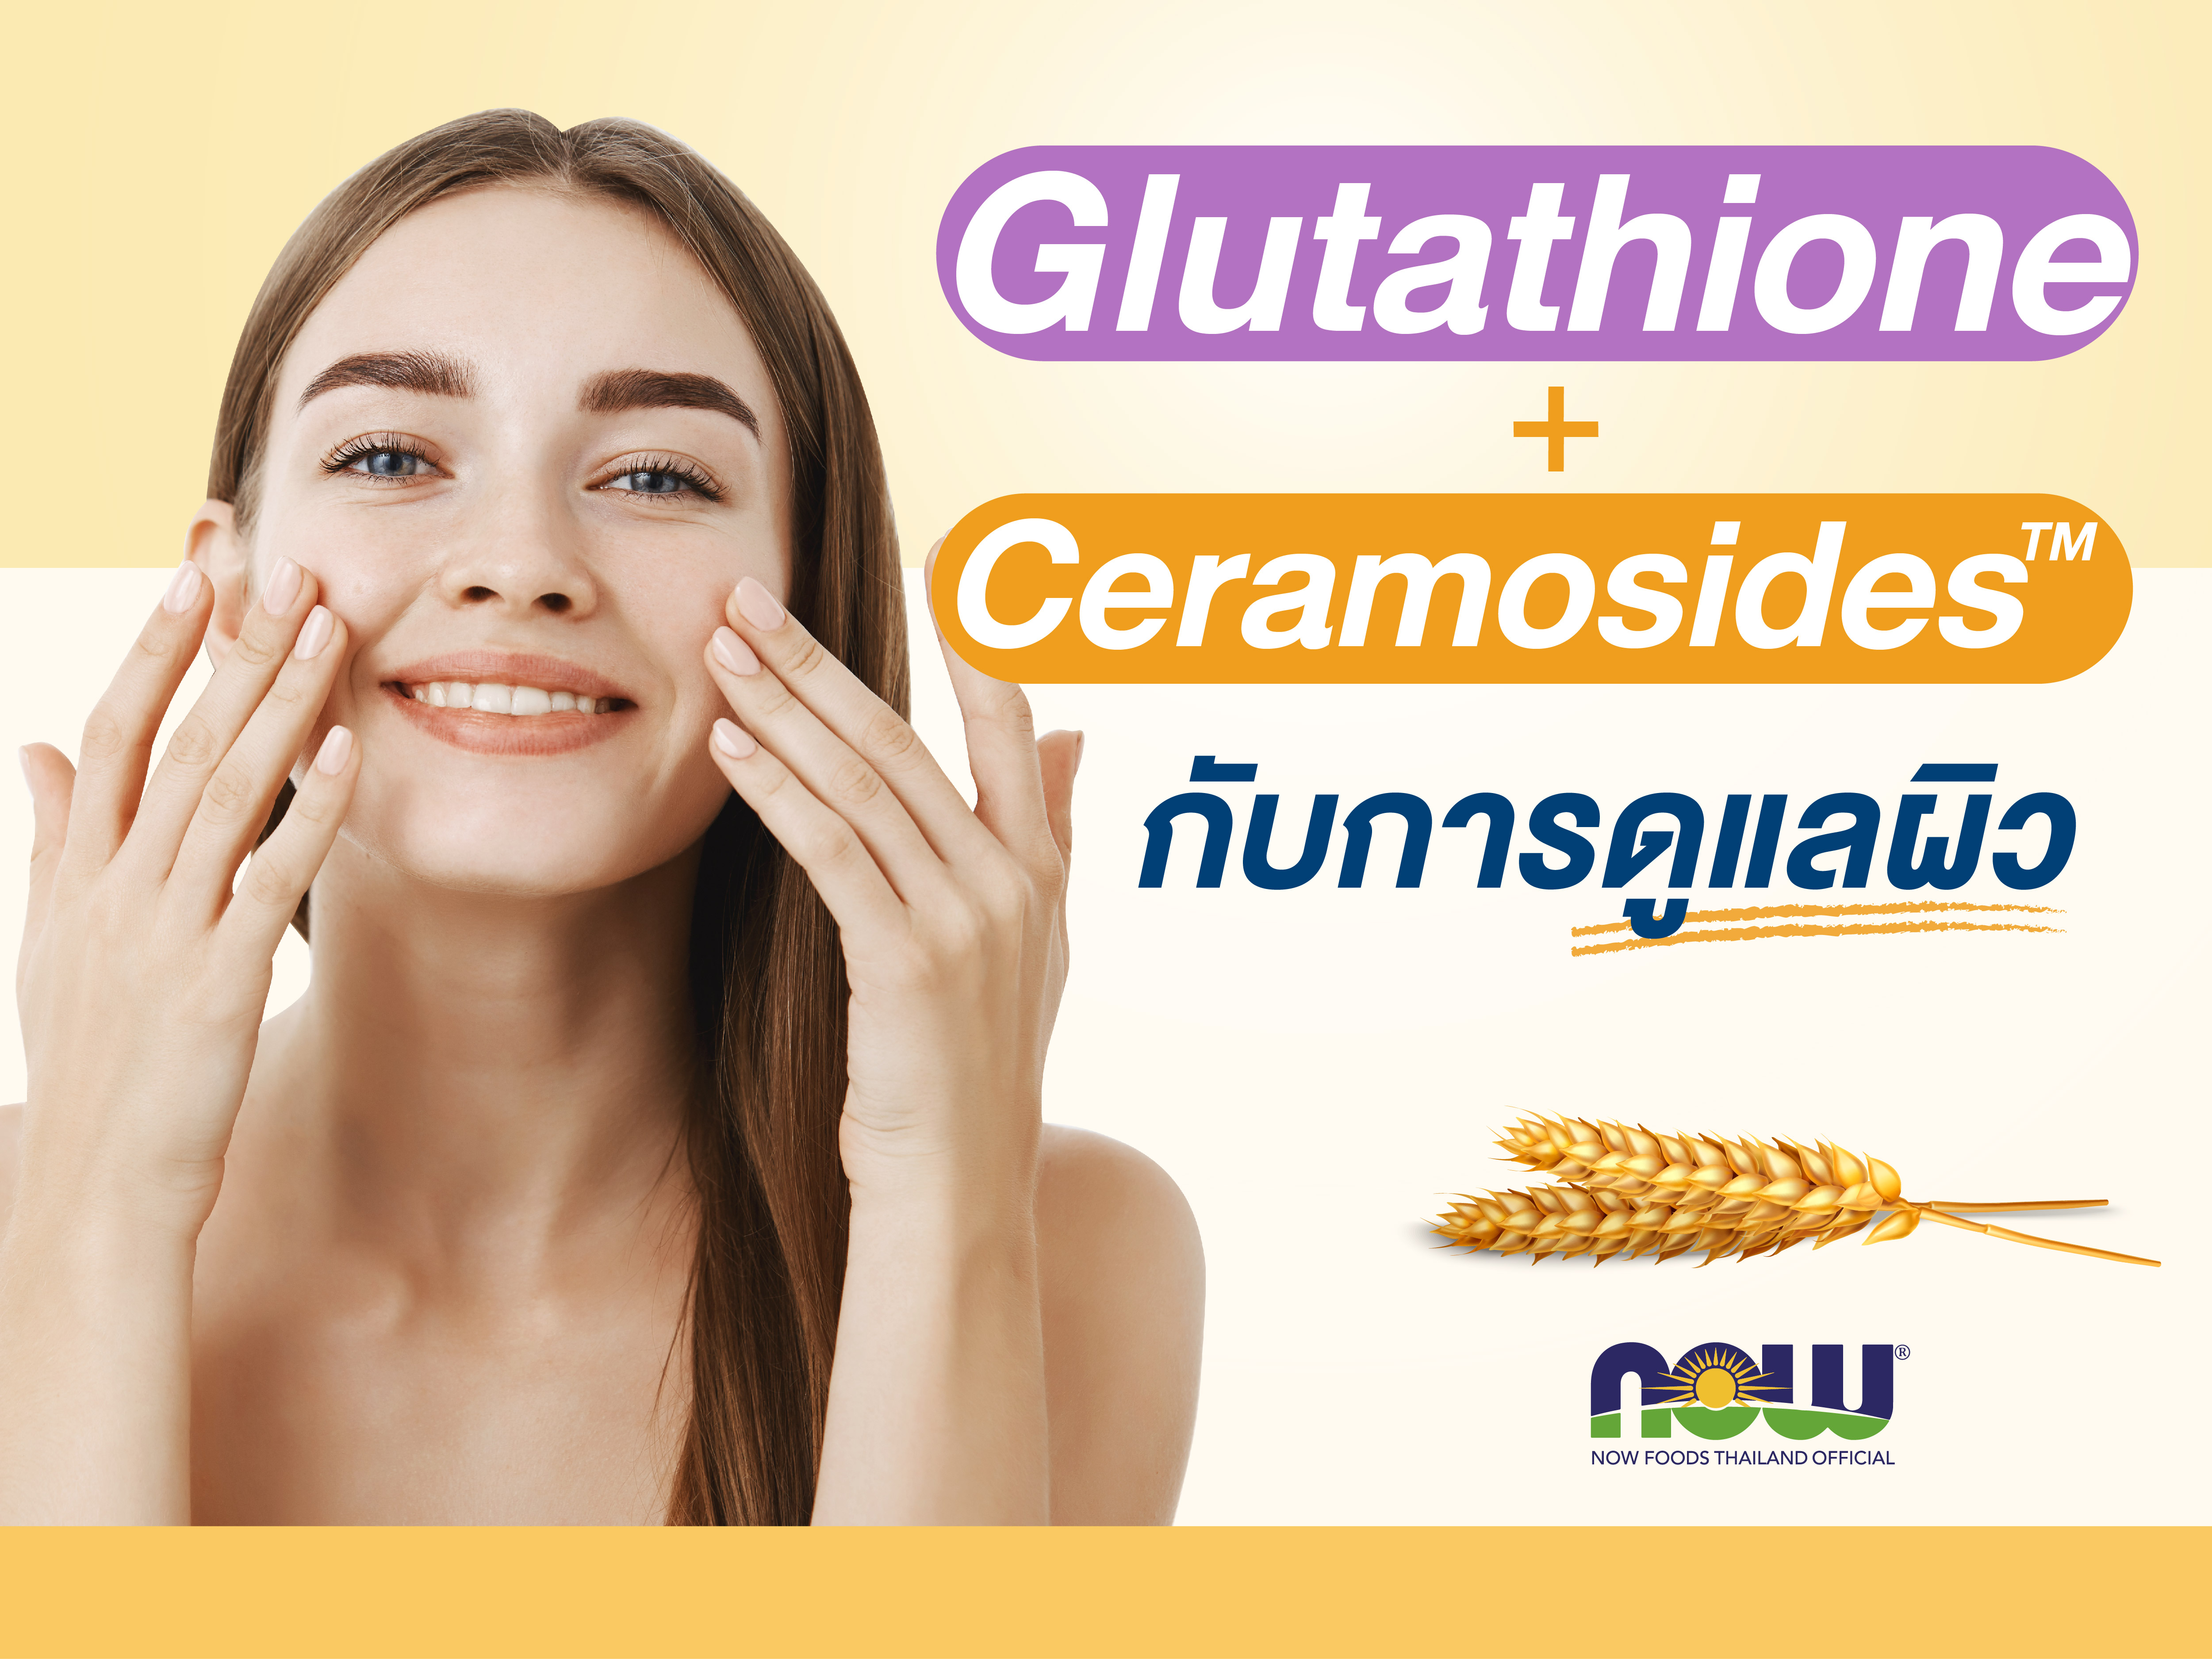 Glutathione+Ceramosides with Skin Care